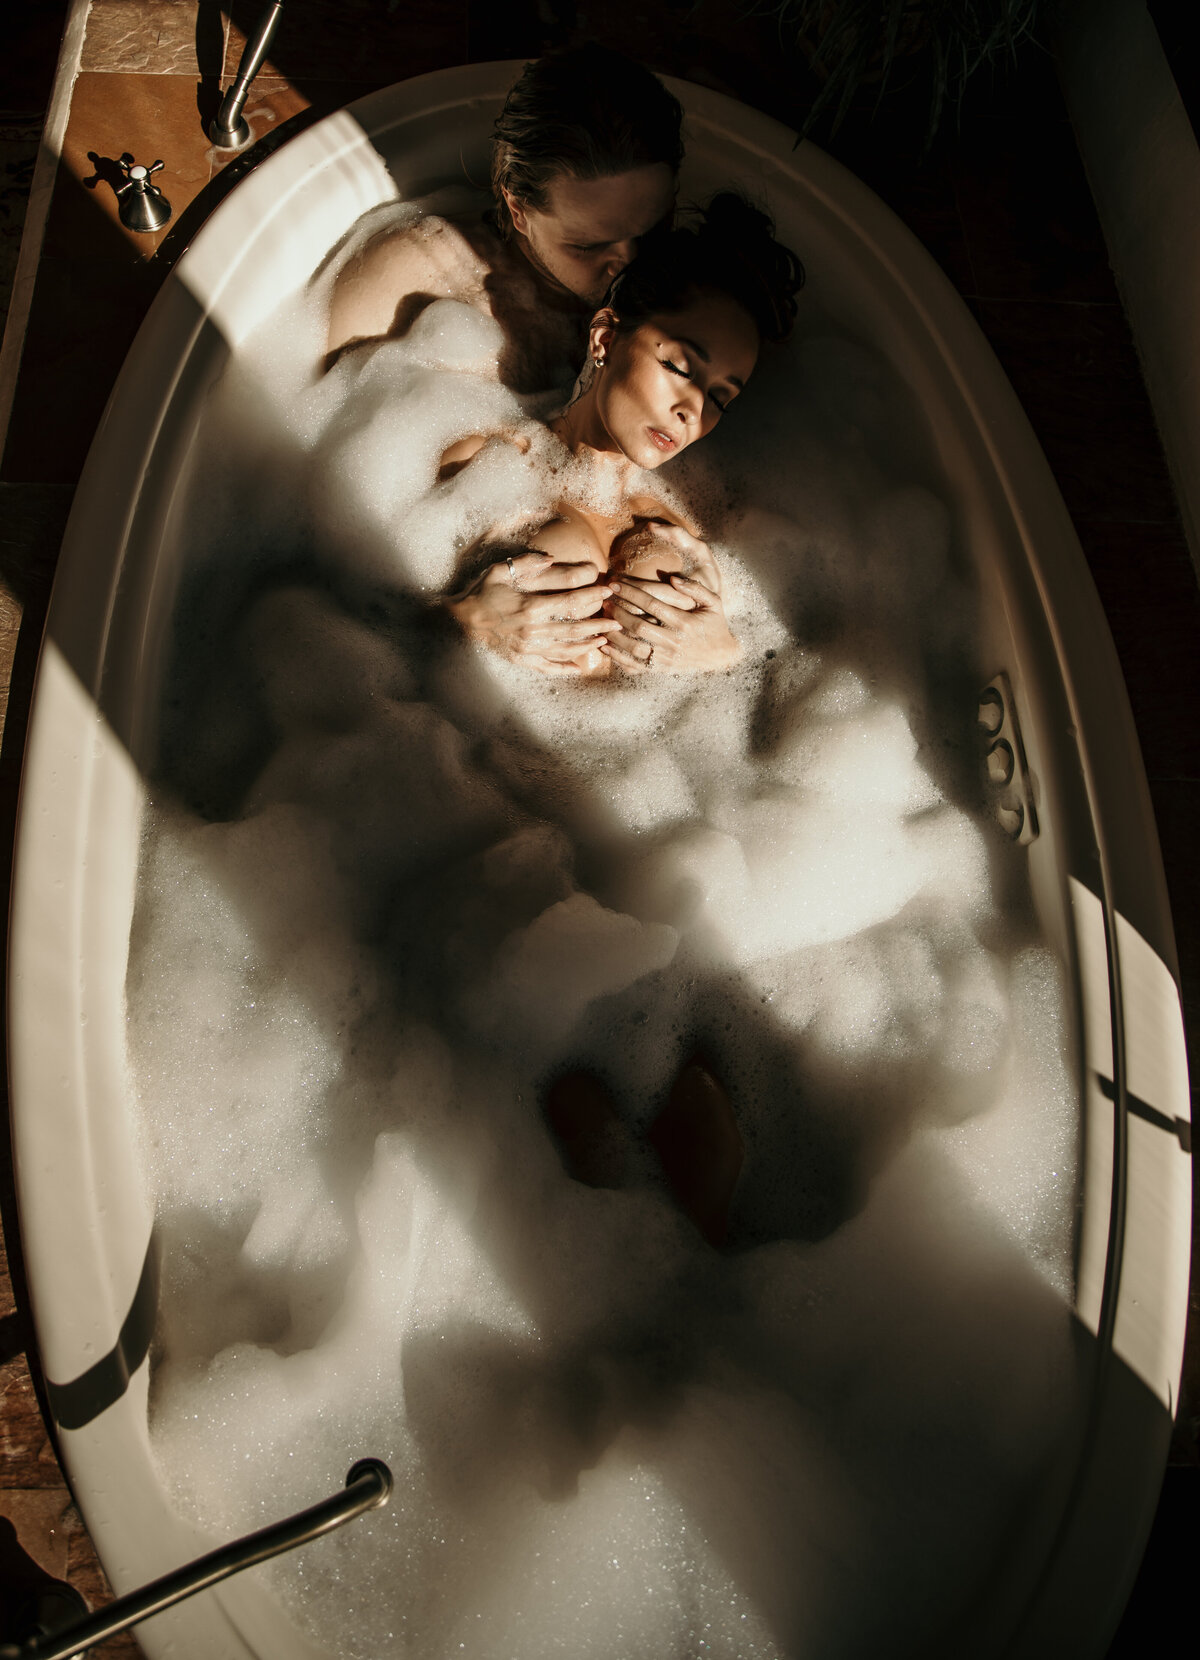 couple snuggling in the bathtub